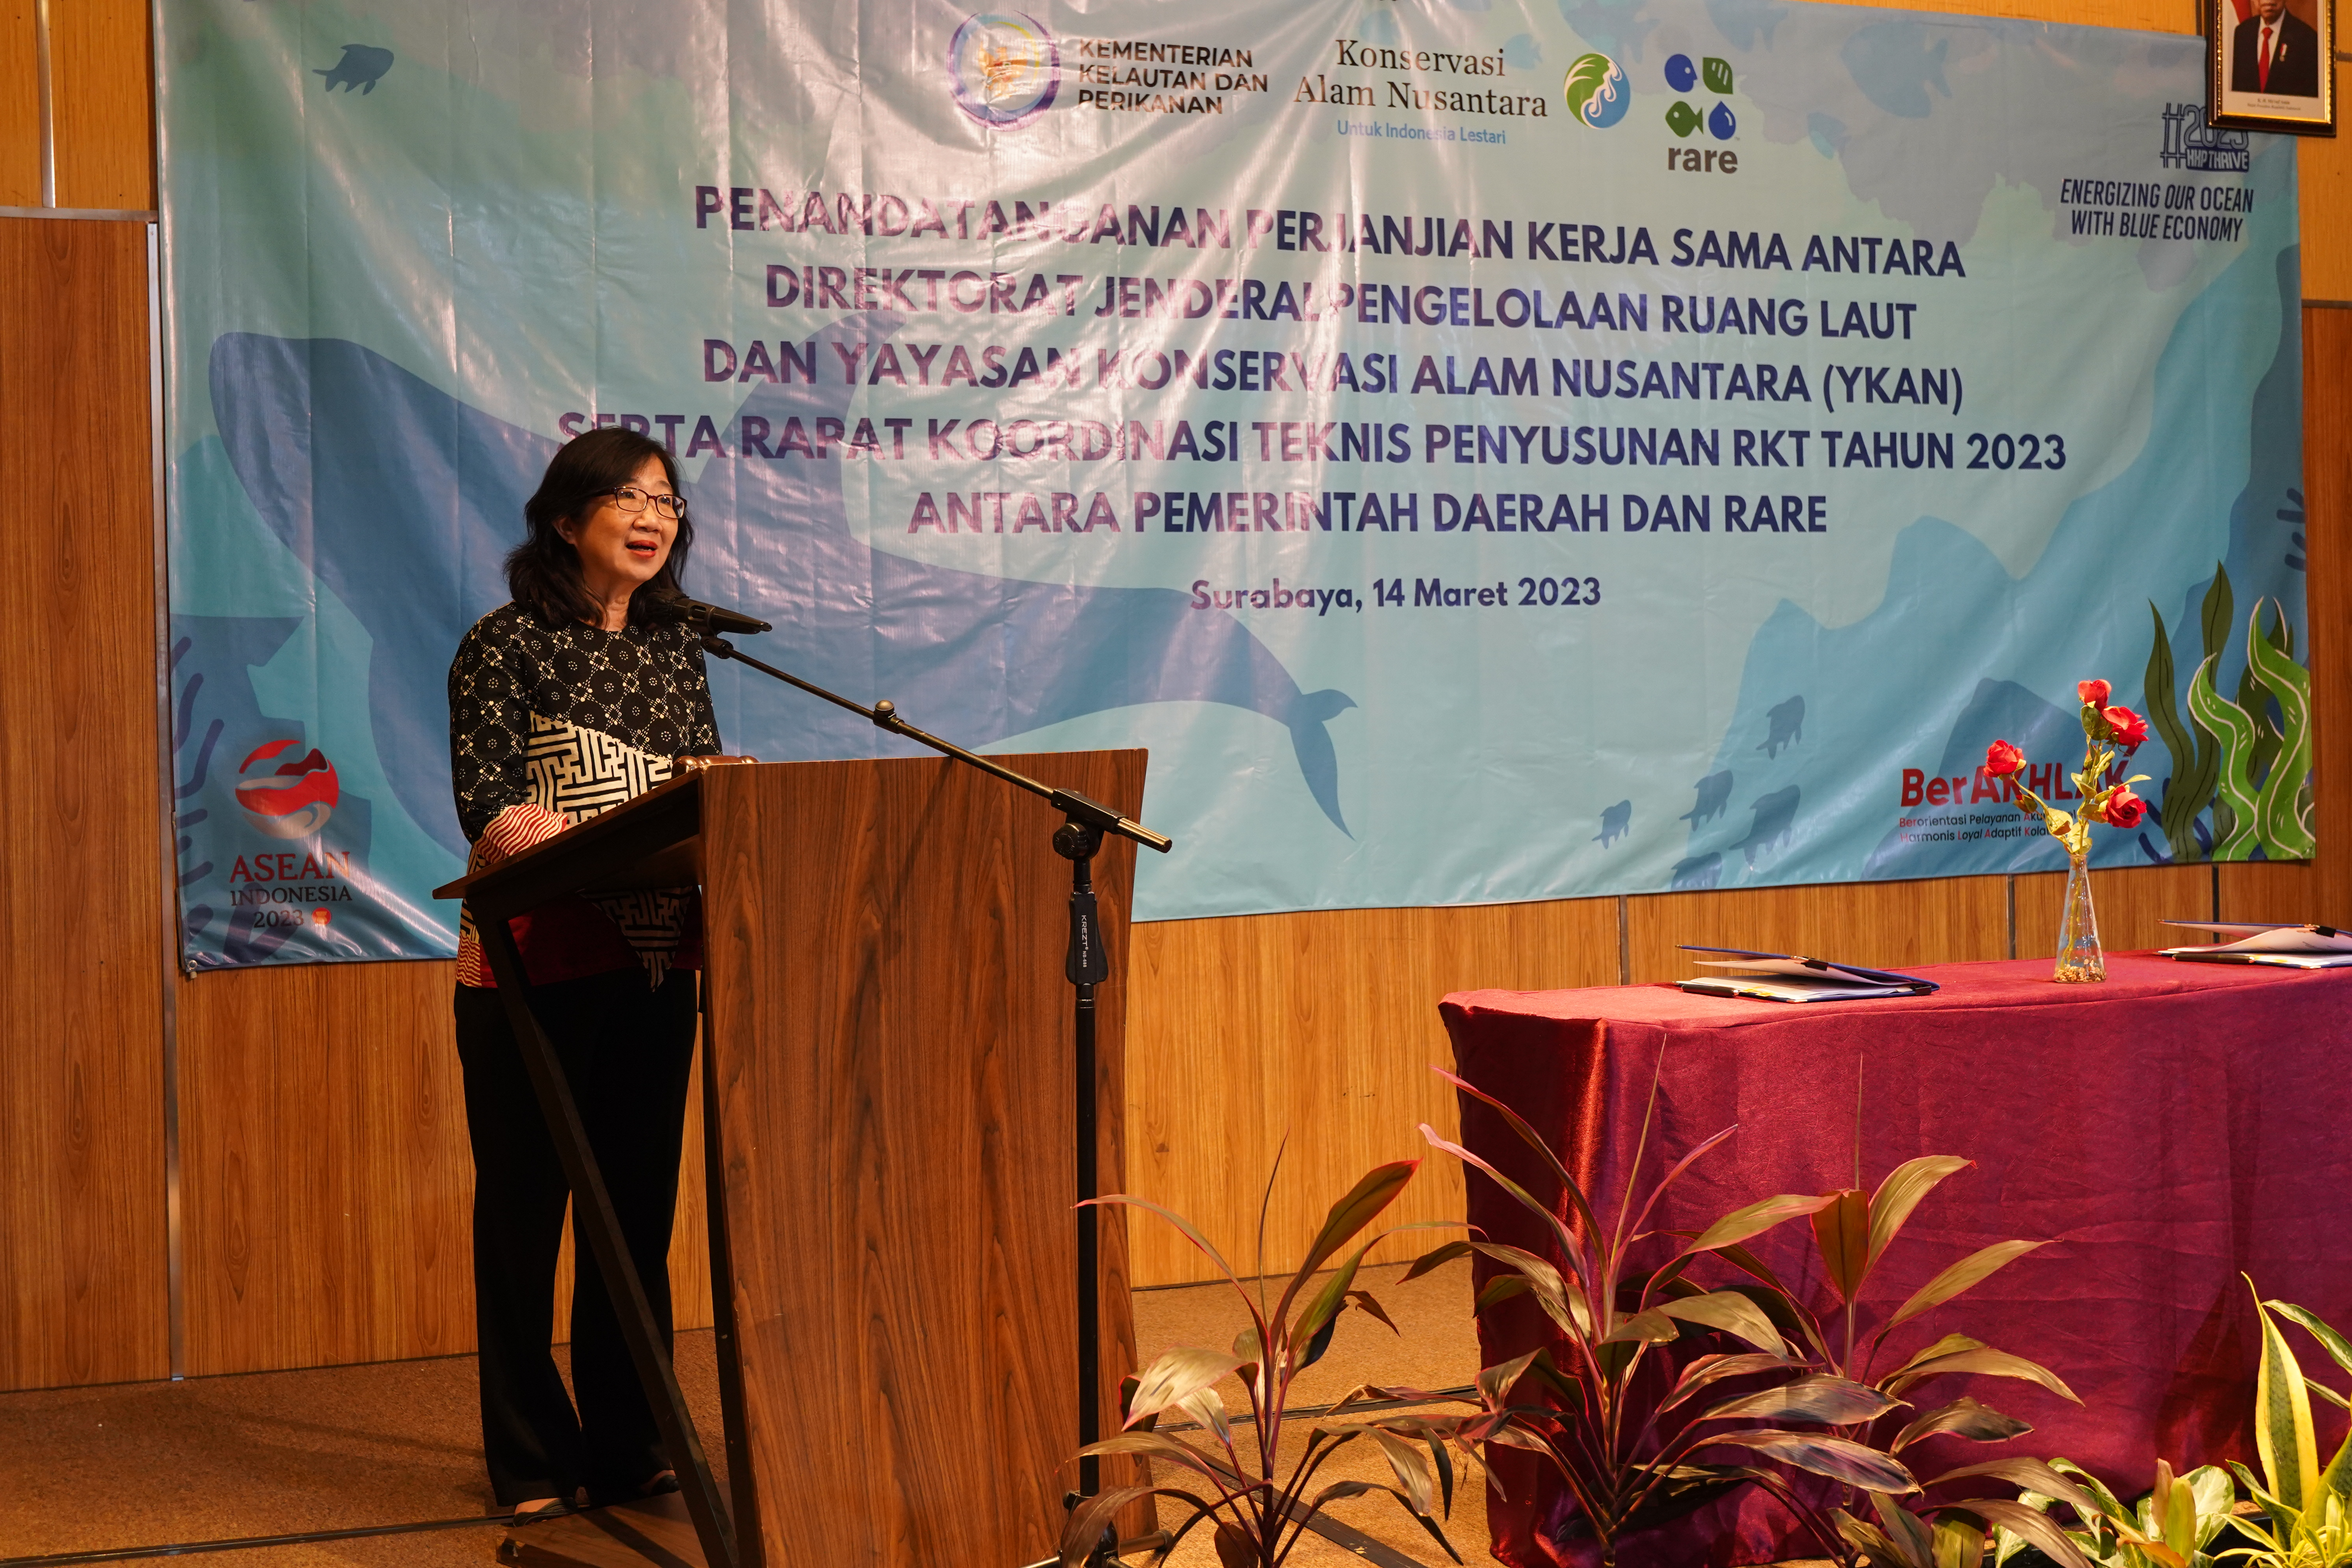 Penandatangan Perjanjjian Kerja Sama antara Direktorat Jenderal Pengeolaan Ruang Laut dengan Yayasan Konservasi Alam Nusantara, Surabaya (14/3)